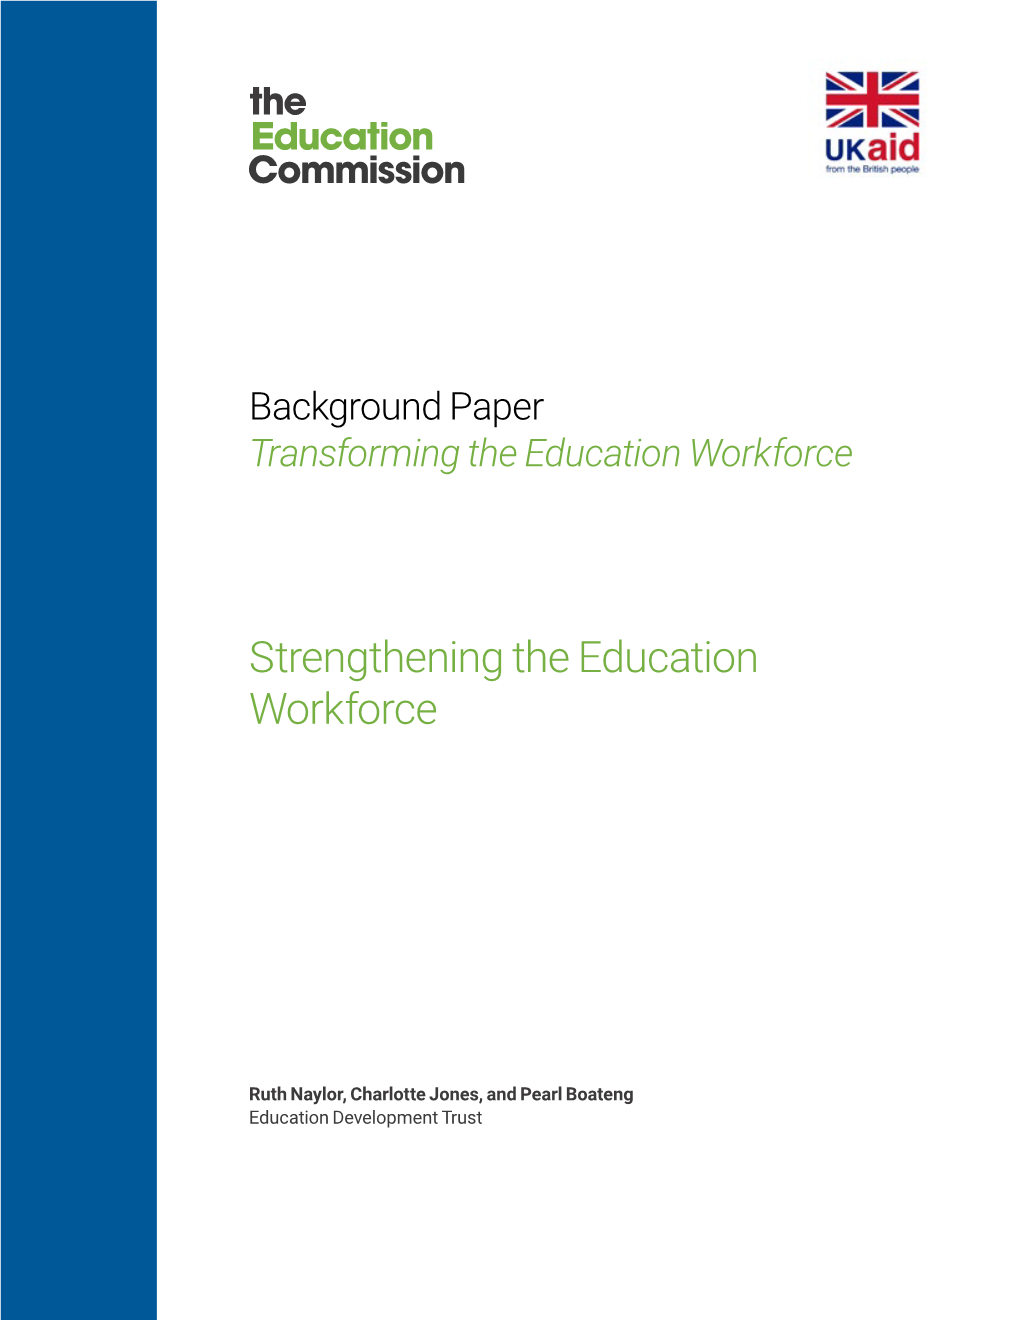 Strengthening the Education Workforce